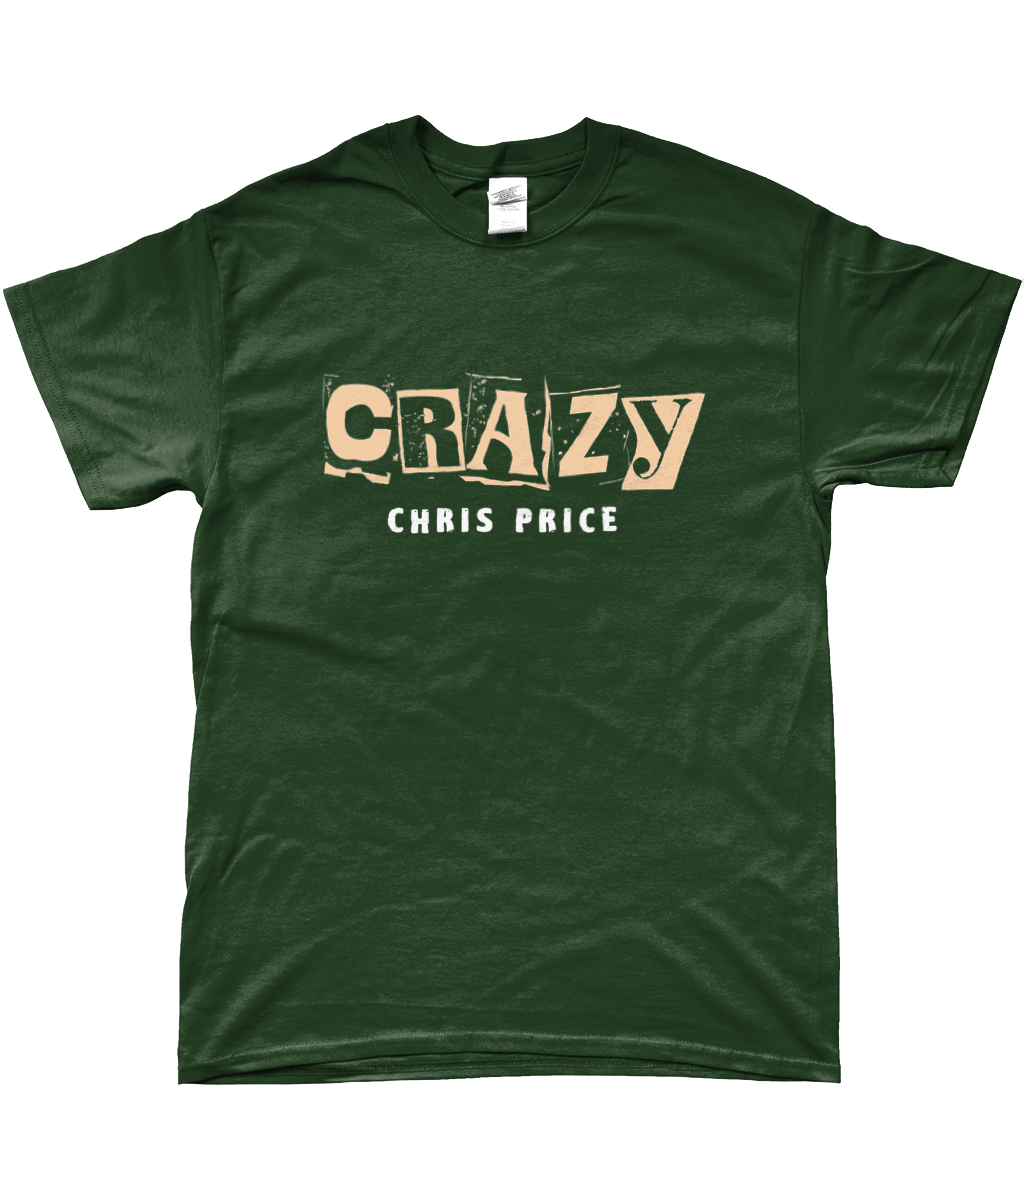 Crazy Chris Price Chest Logo (Dark)